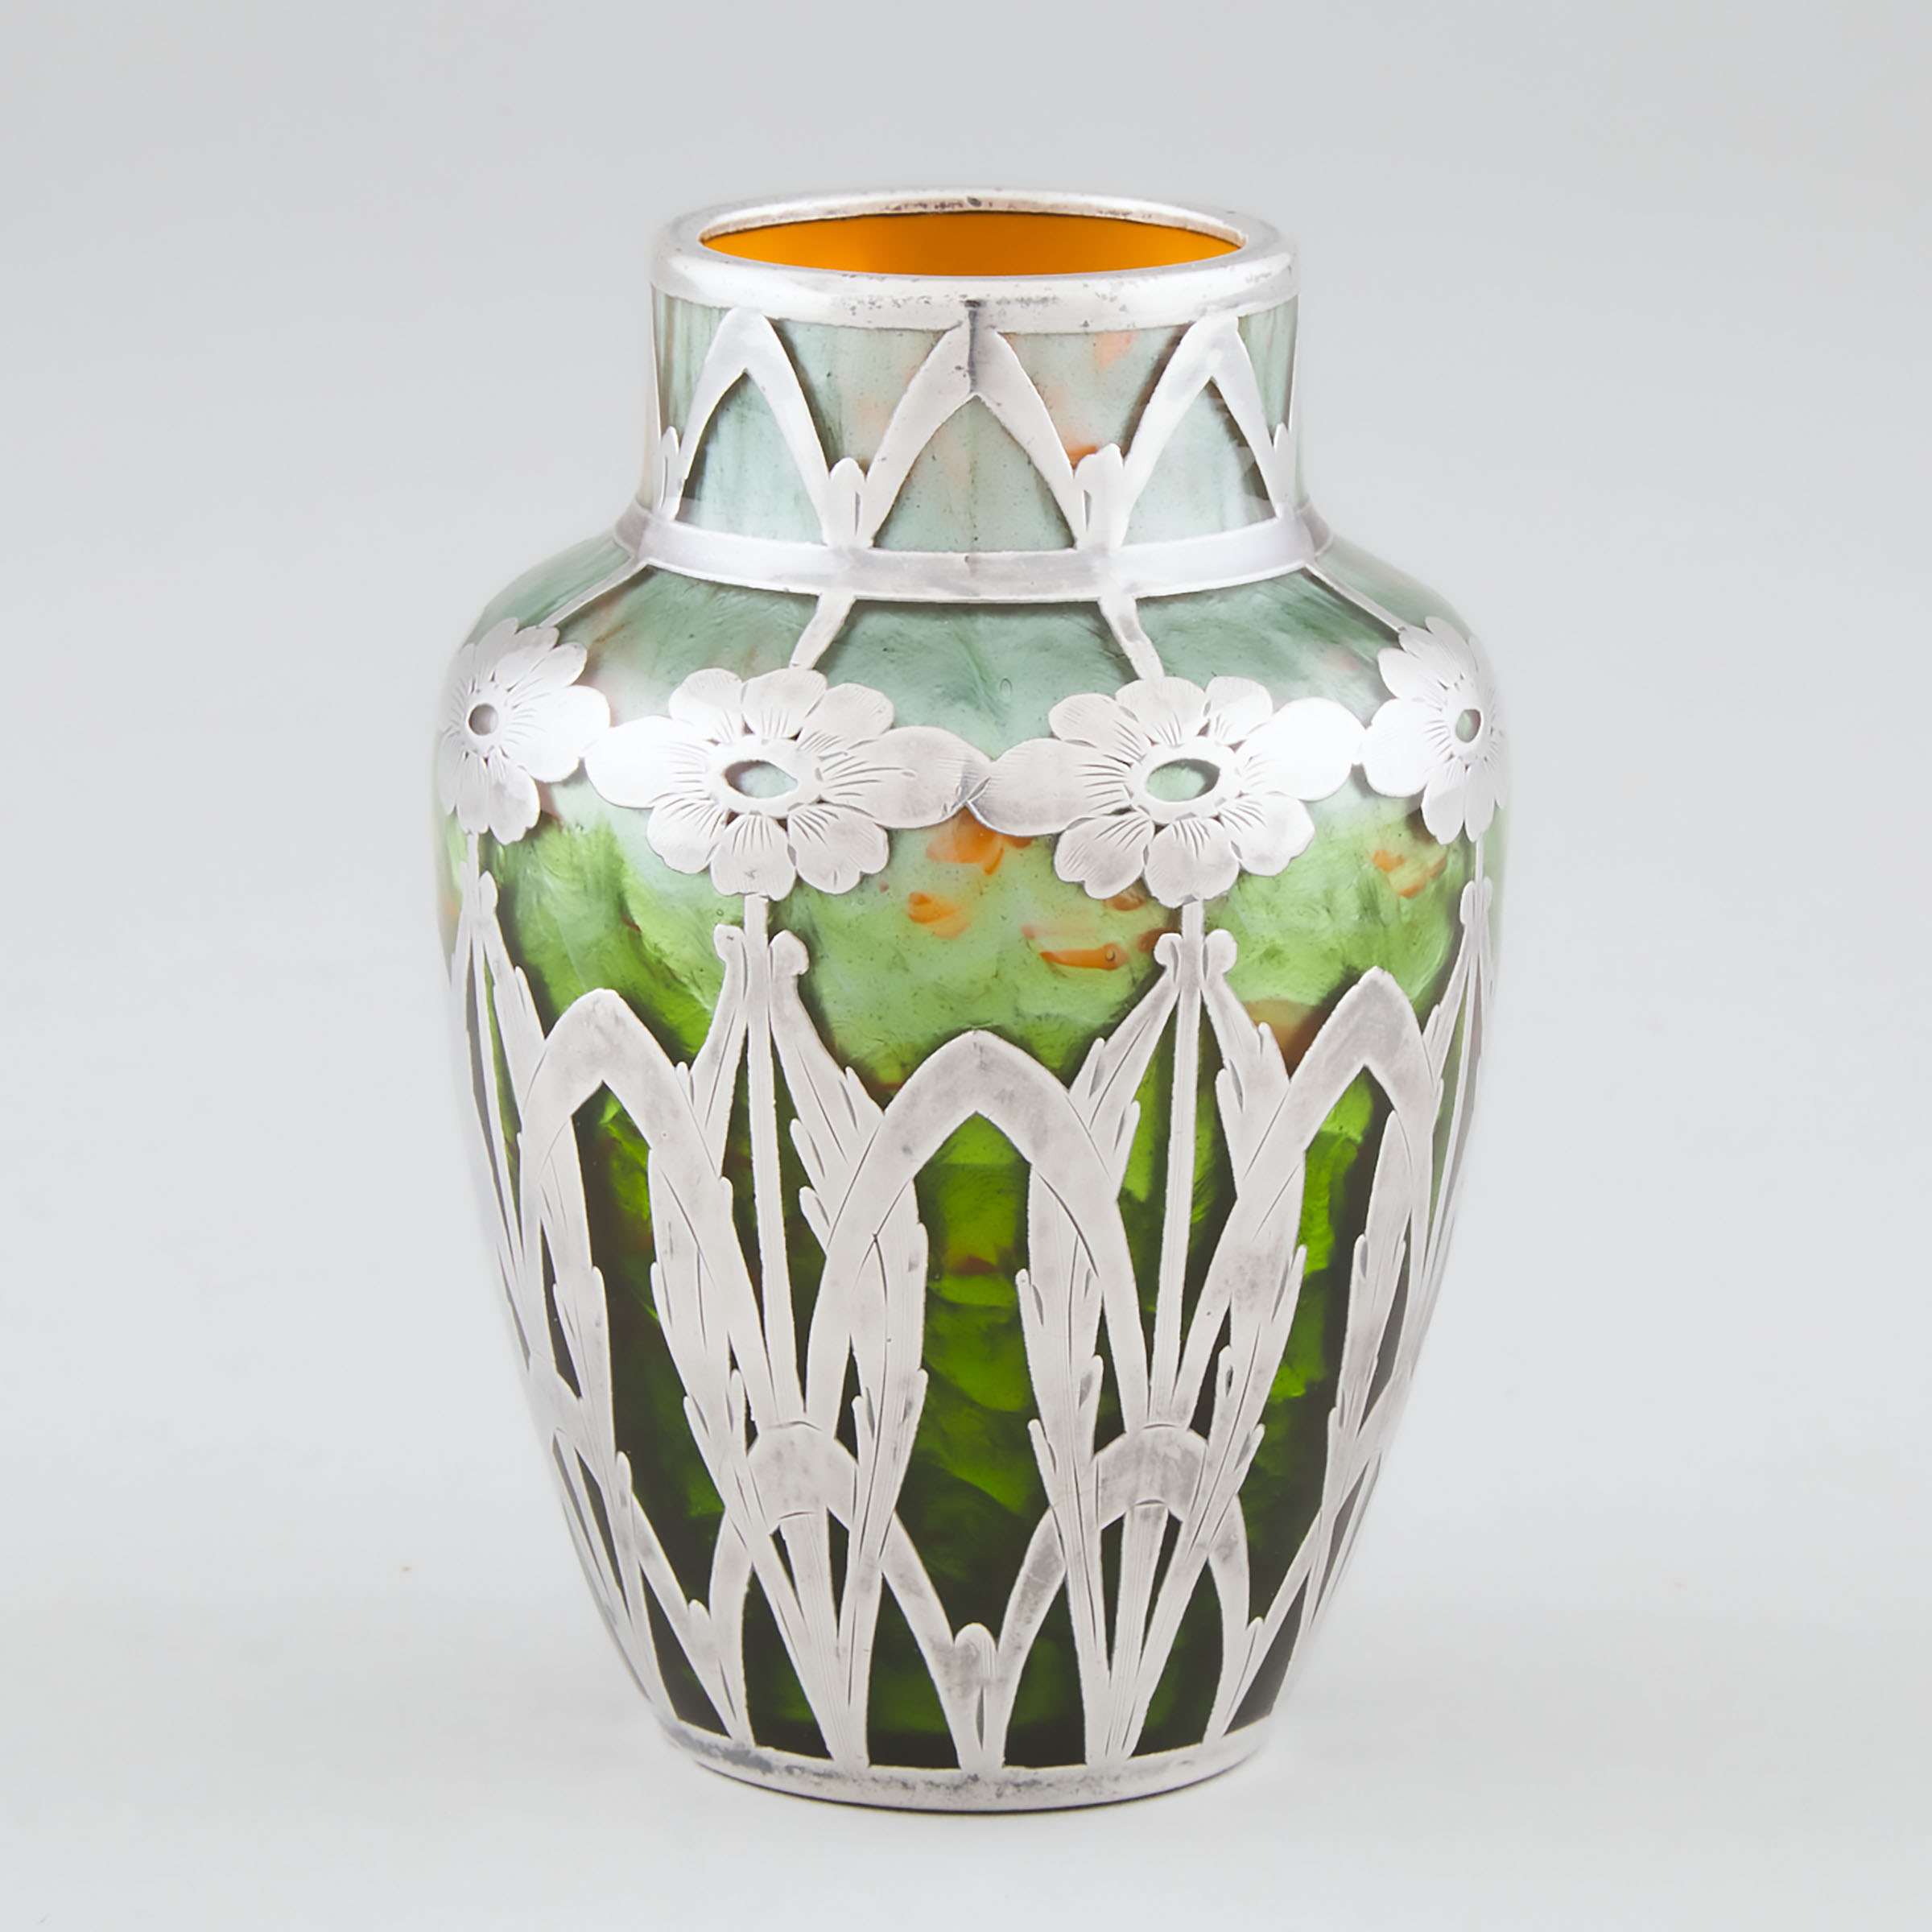 Loetz Silver Overlaid 'Titania' Glass Vase, c.1900